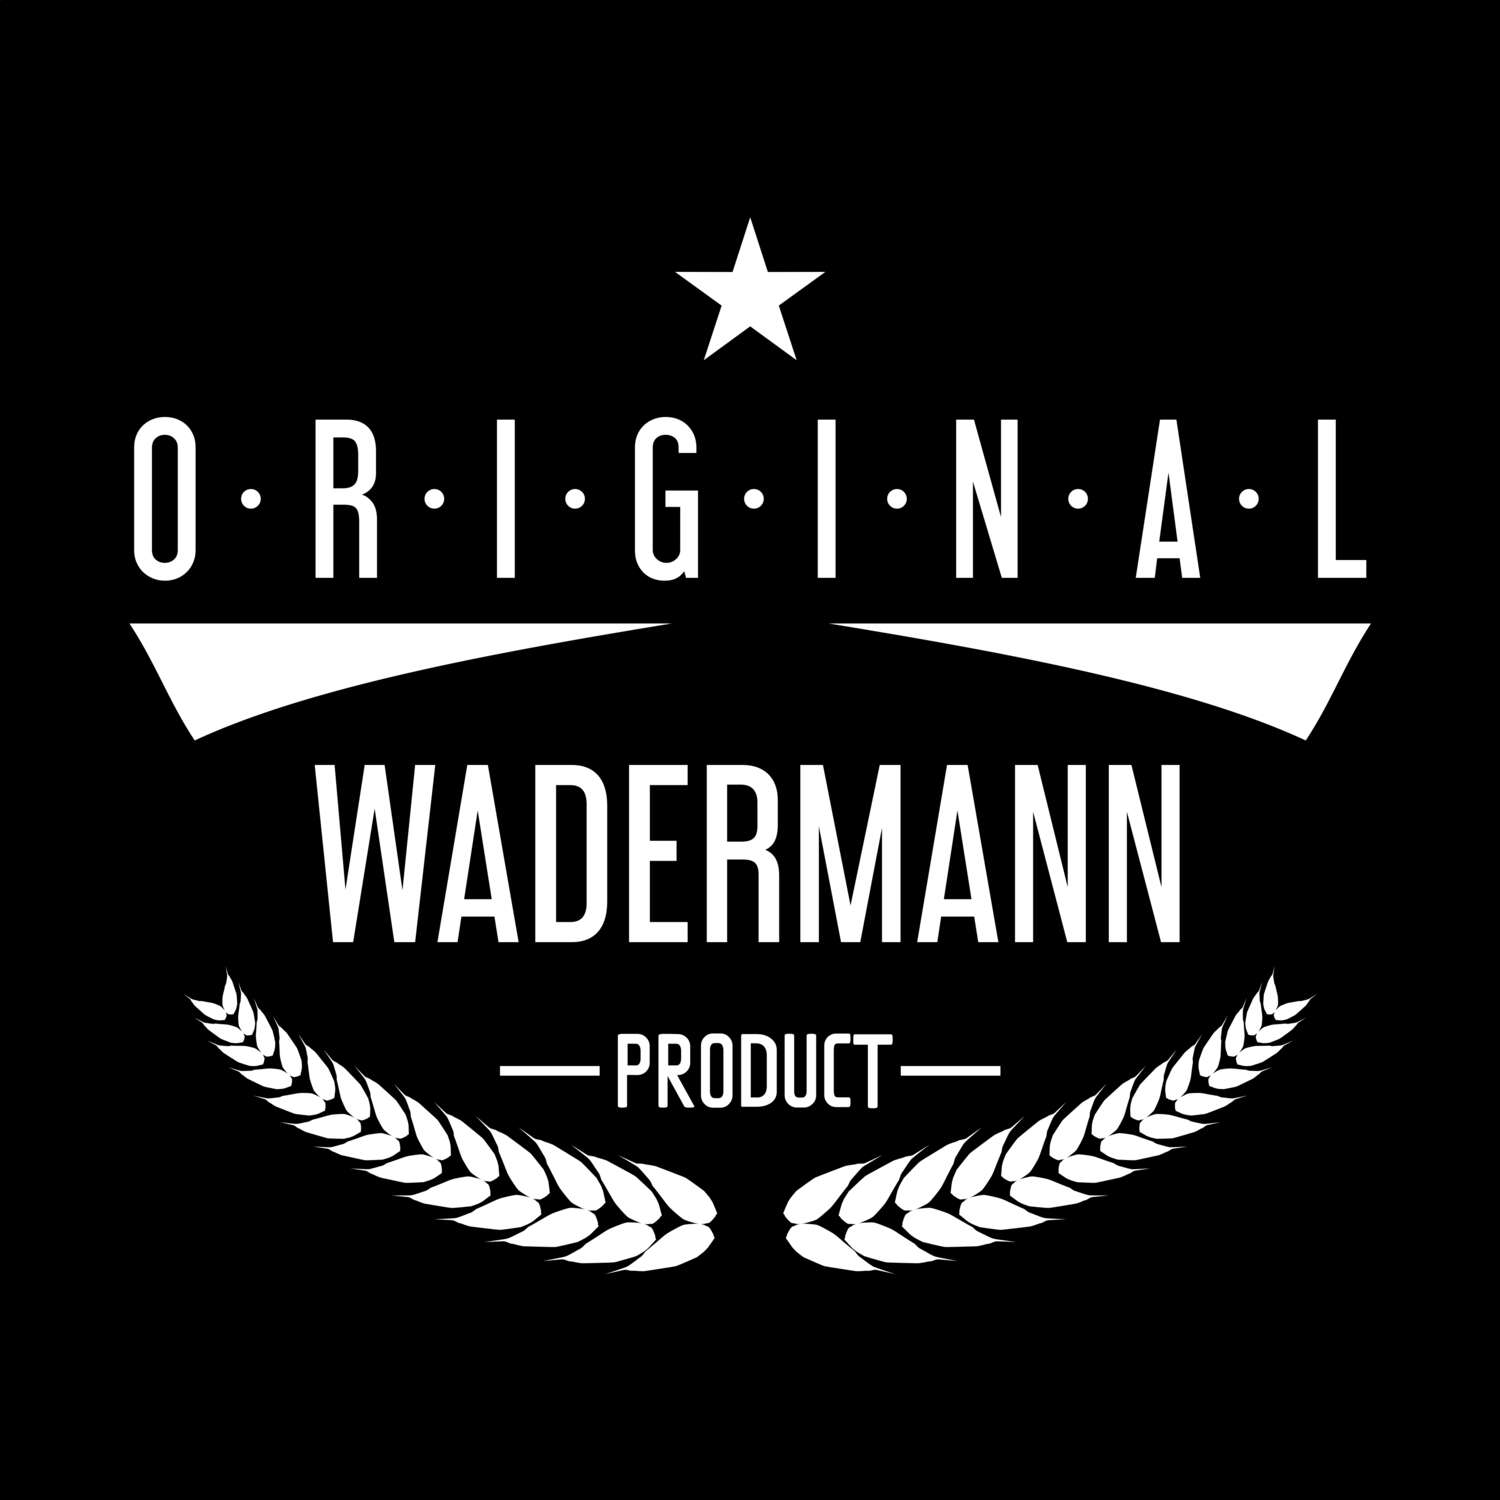 Wadermann T-Shirt »Original Product«